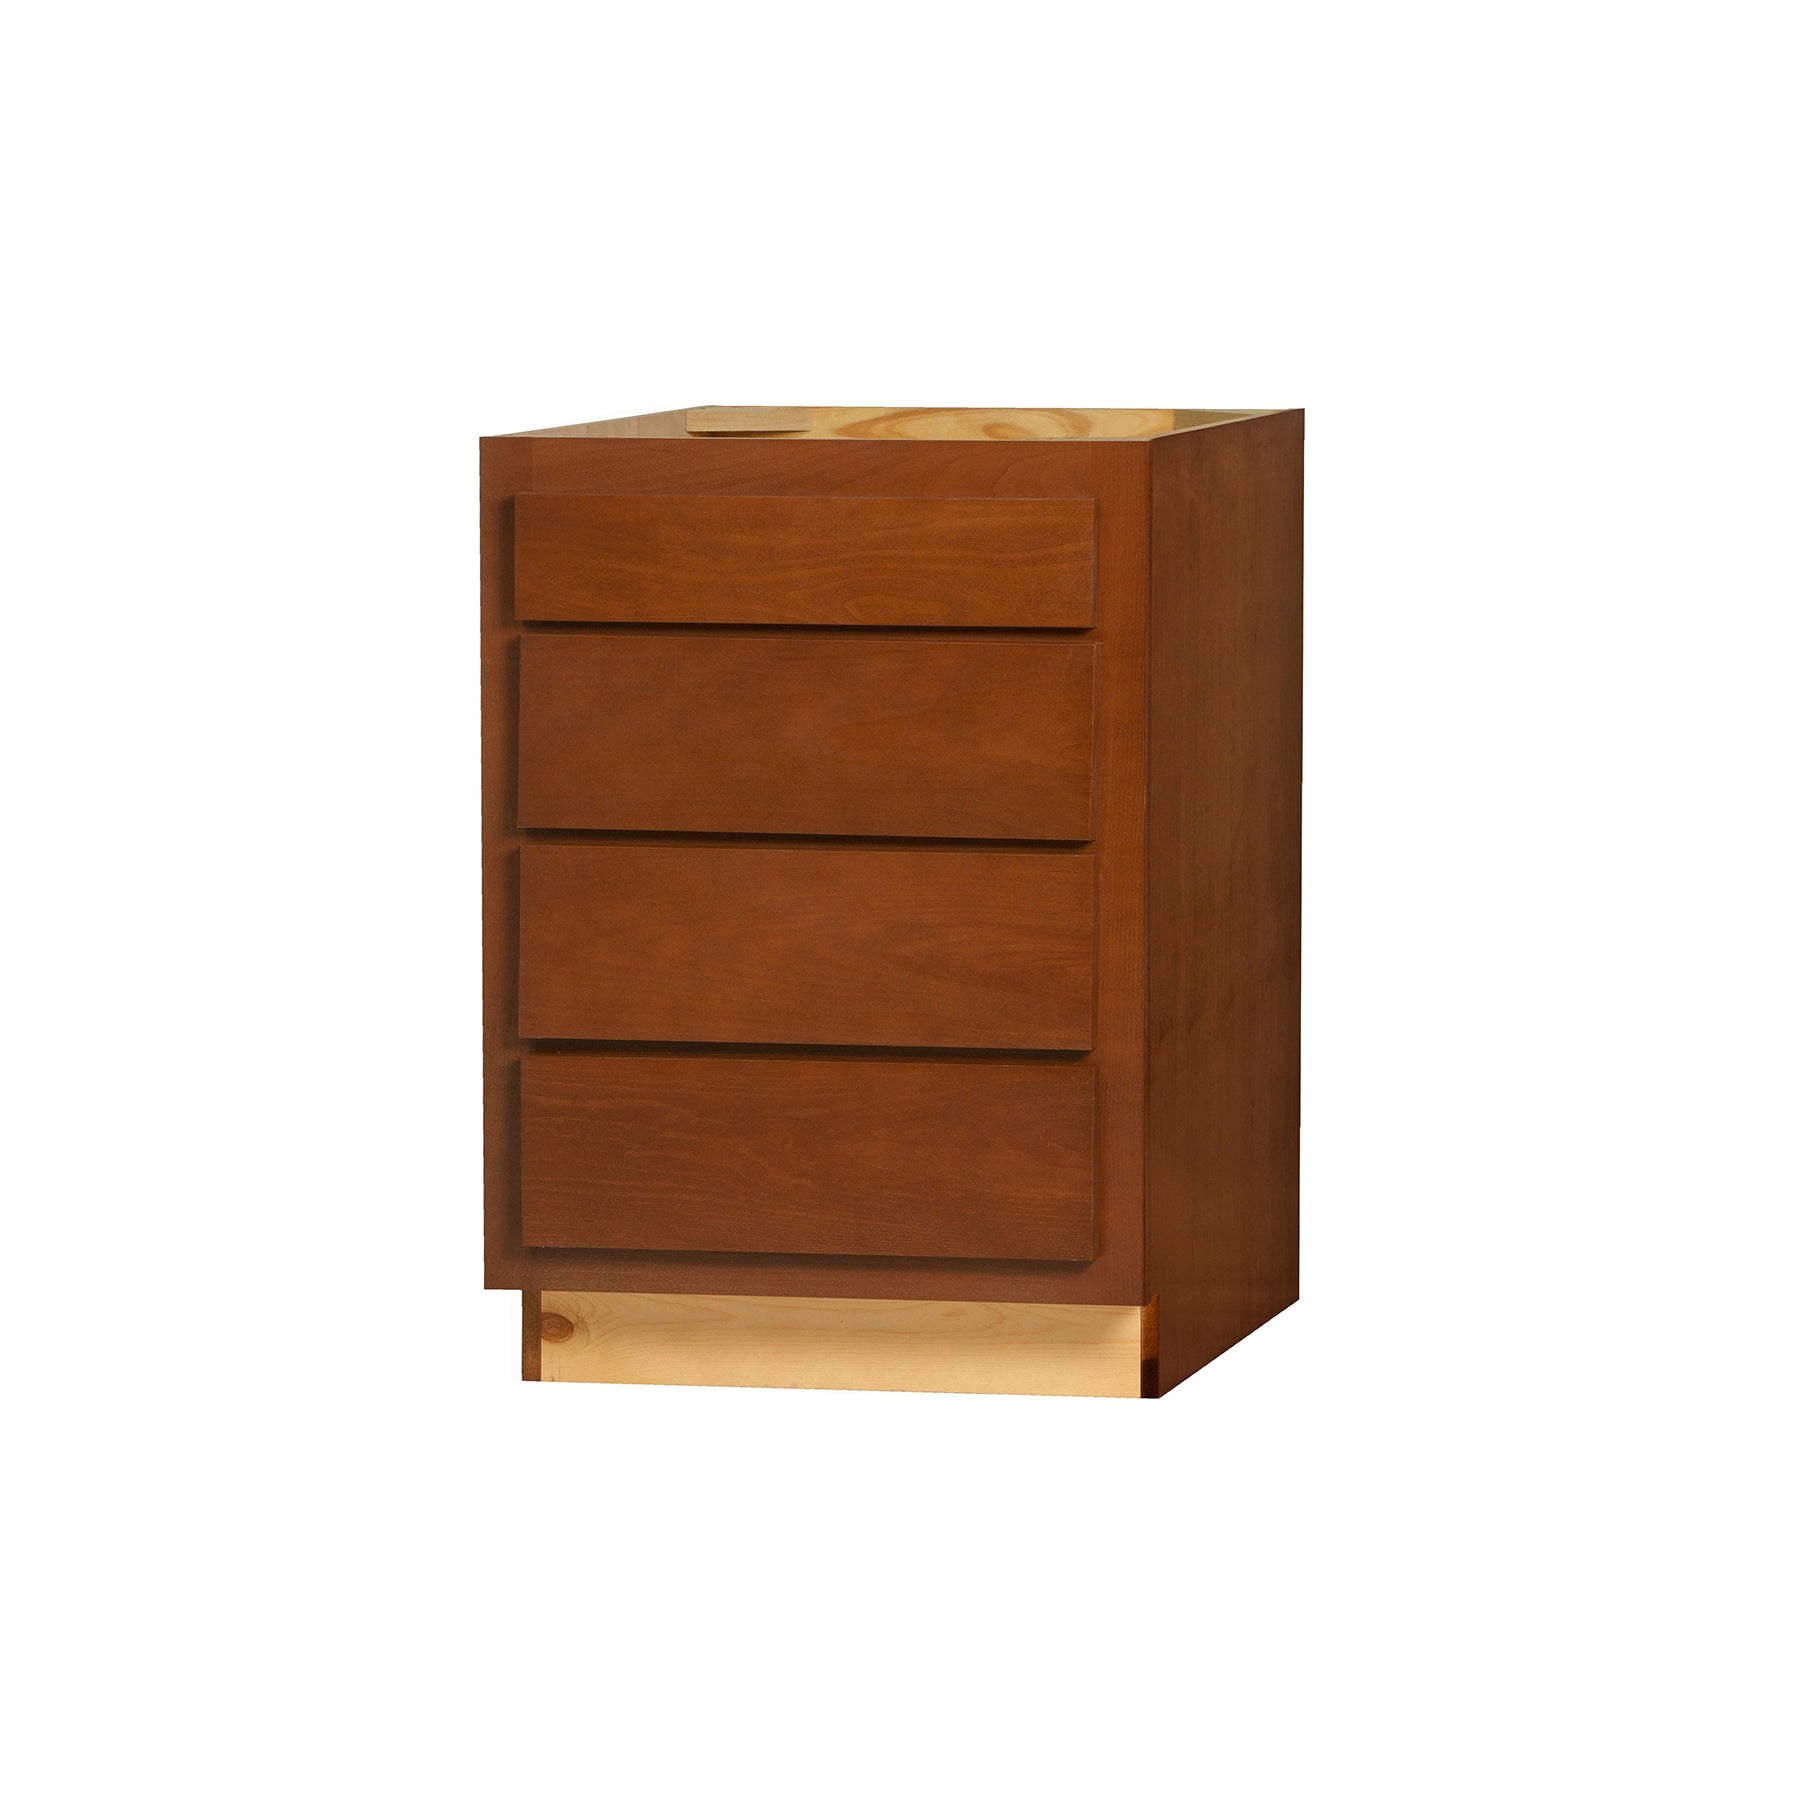 4 Drawer Cabinet - Glenwood Shaker - 24 Inch W x 34.5 Inch H x 24 Inch D